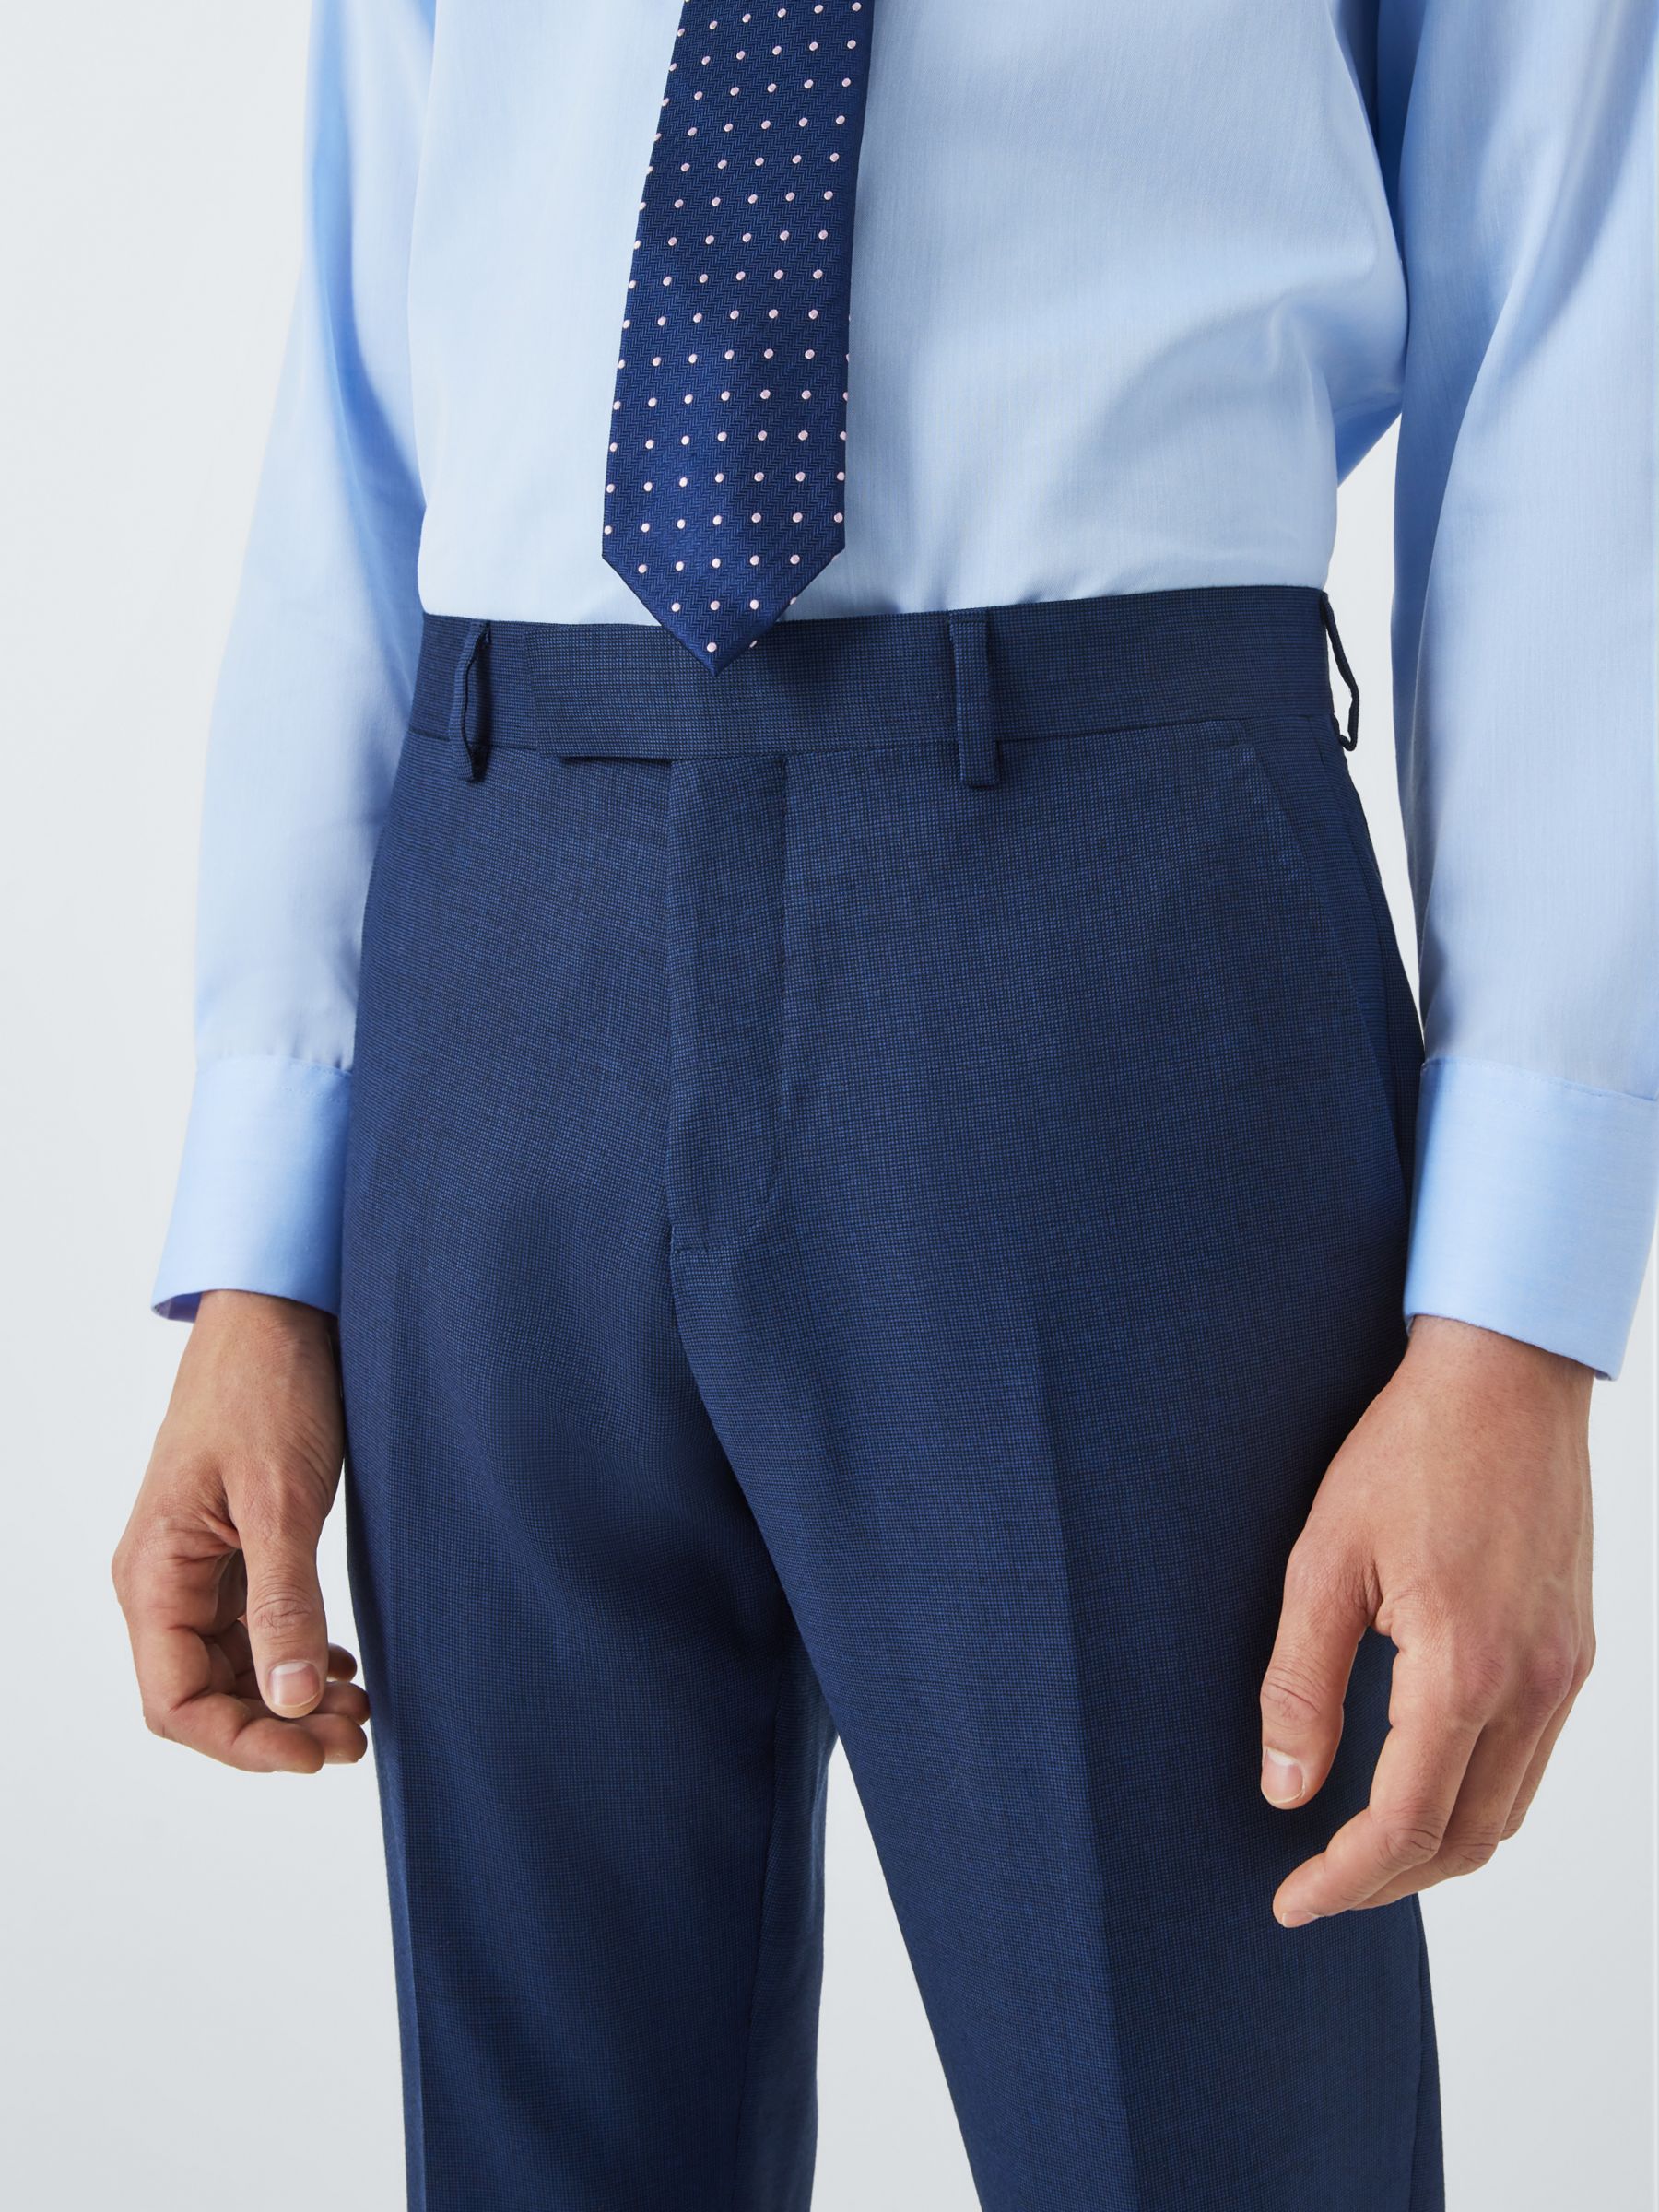 John Lewis Clarendon Wool Regular Suit Trousers, Royal Blue, 40R